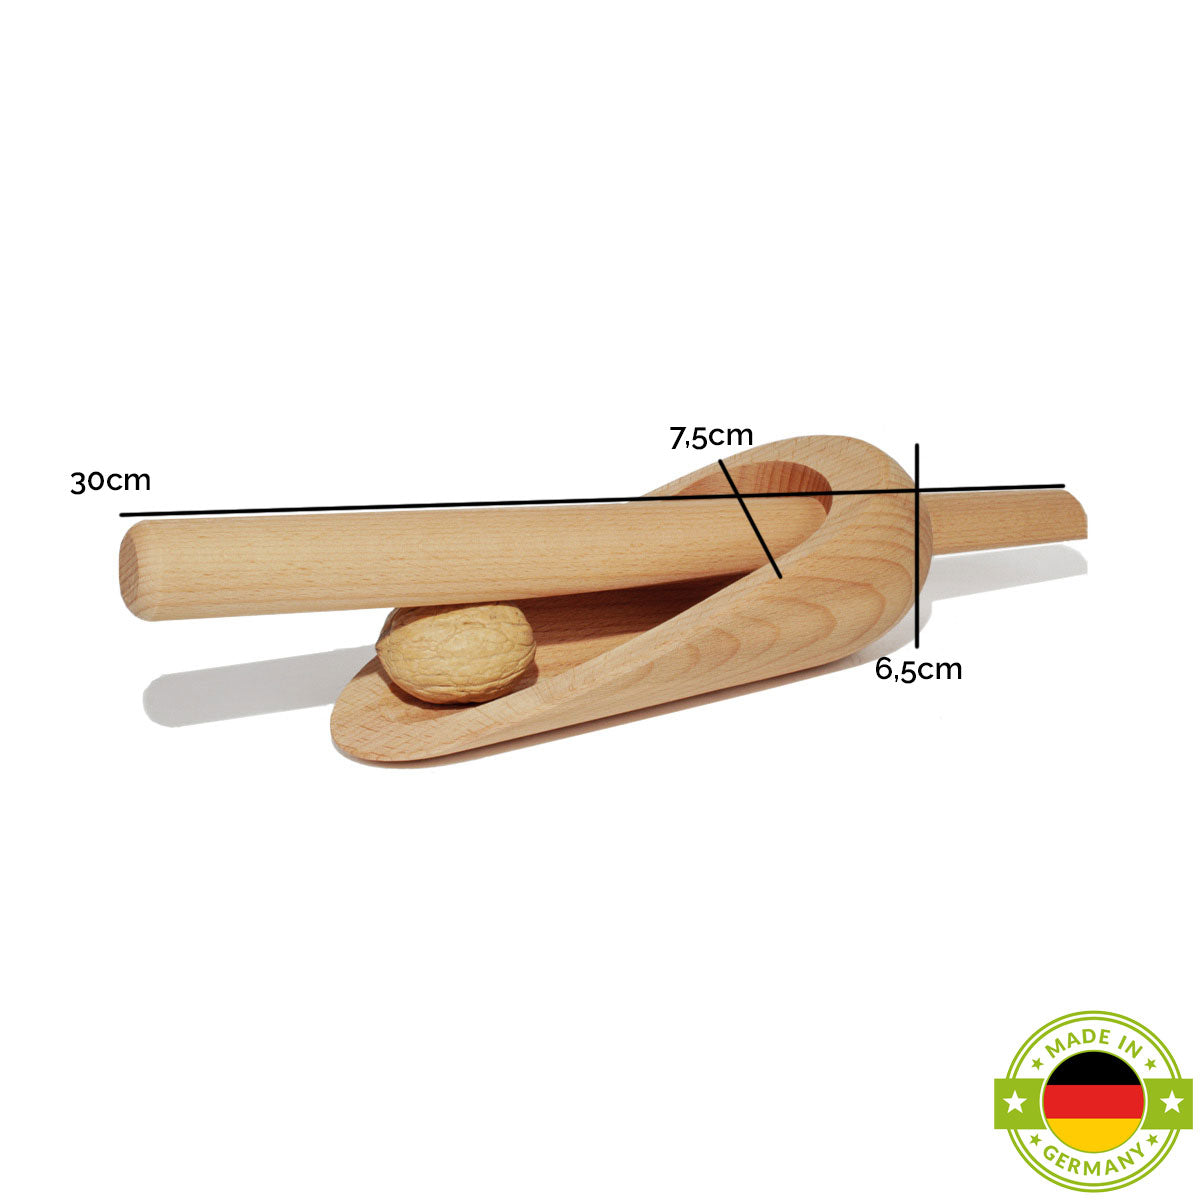 Nussbesteck/Nussknacker ‘GeNuss’ aus Buchenholz | ästhetisch & funktional | Made in Germany